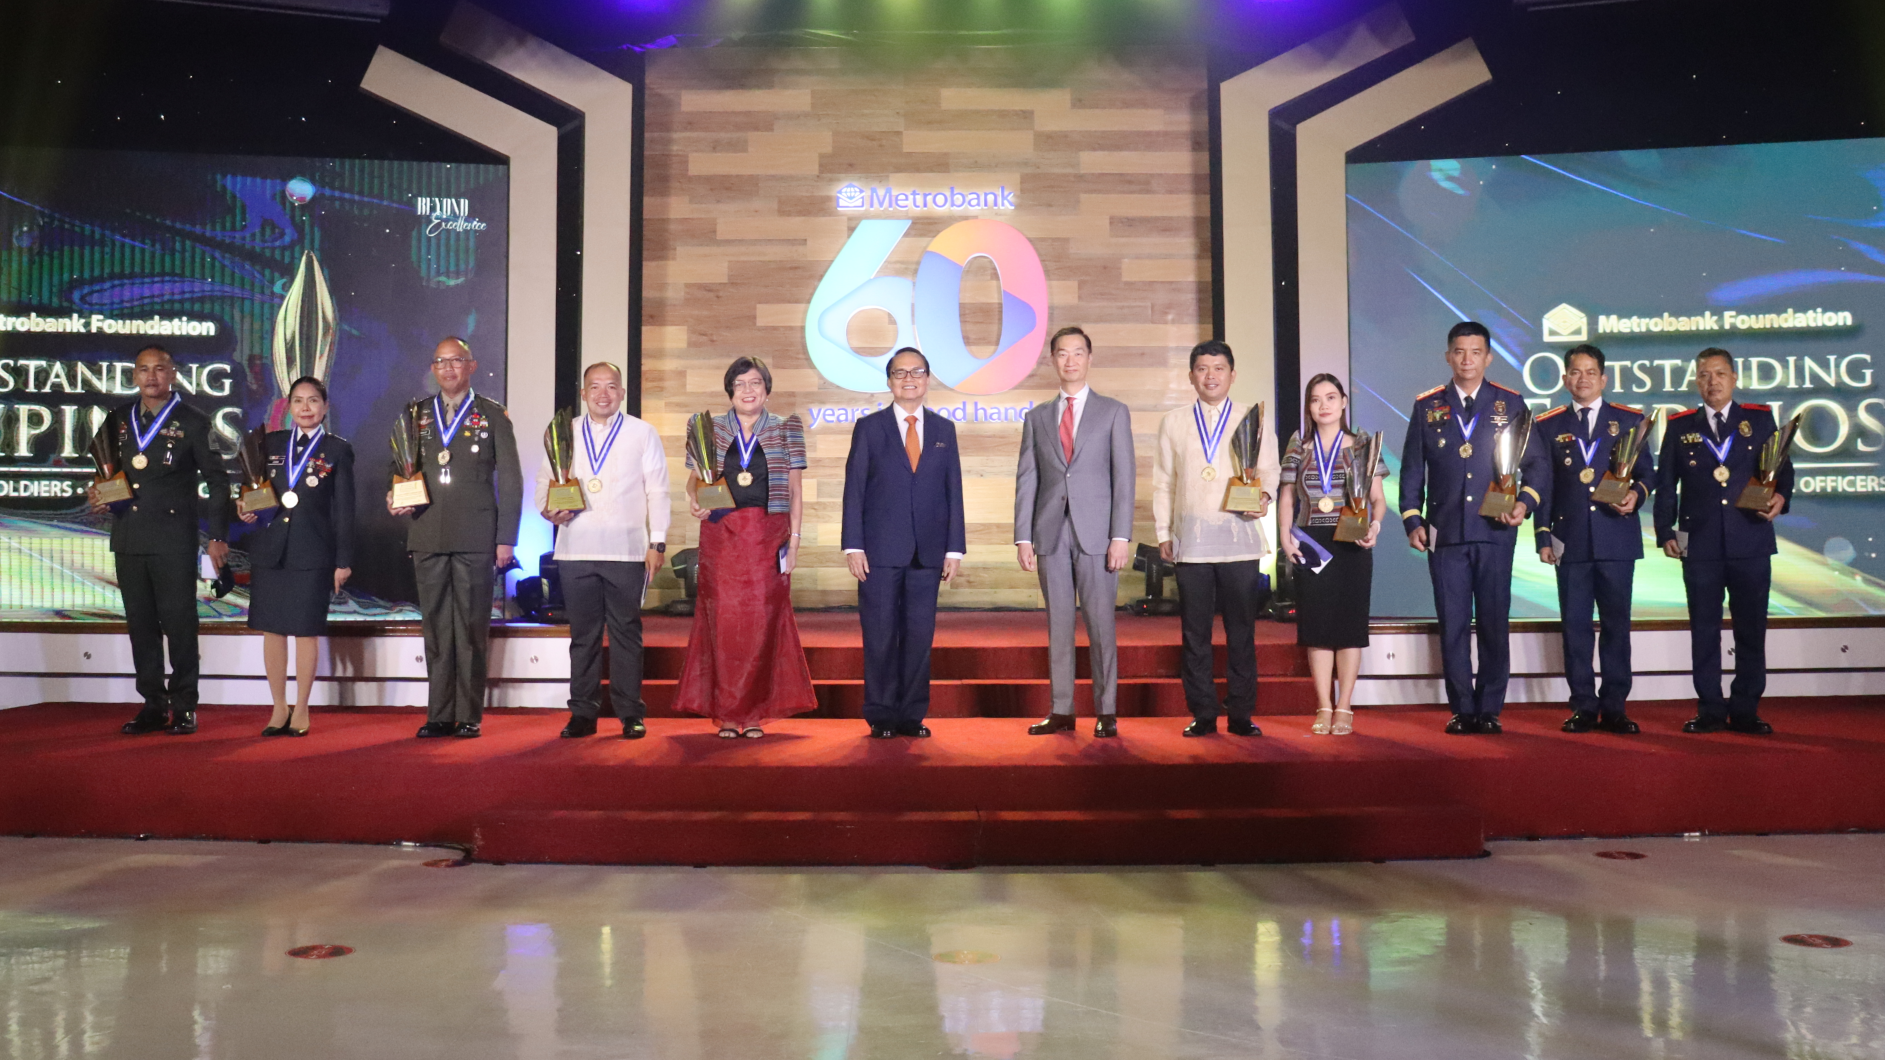 2022 Metrobank Foundation Outstanding Filipinos Awarded